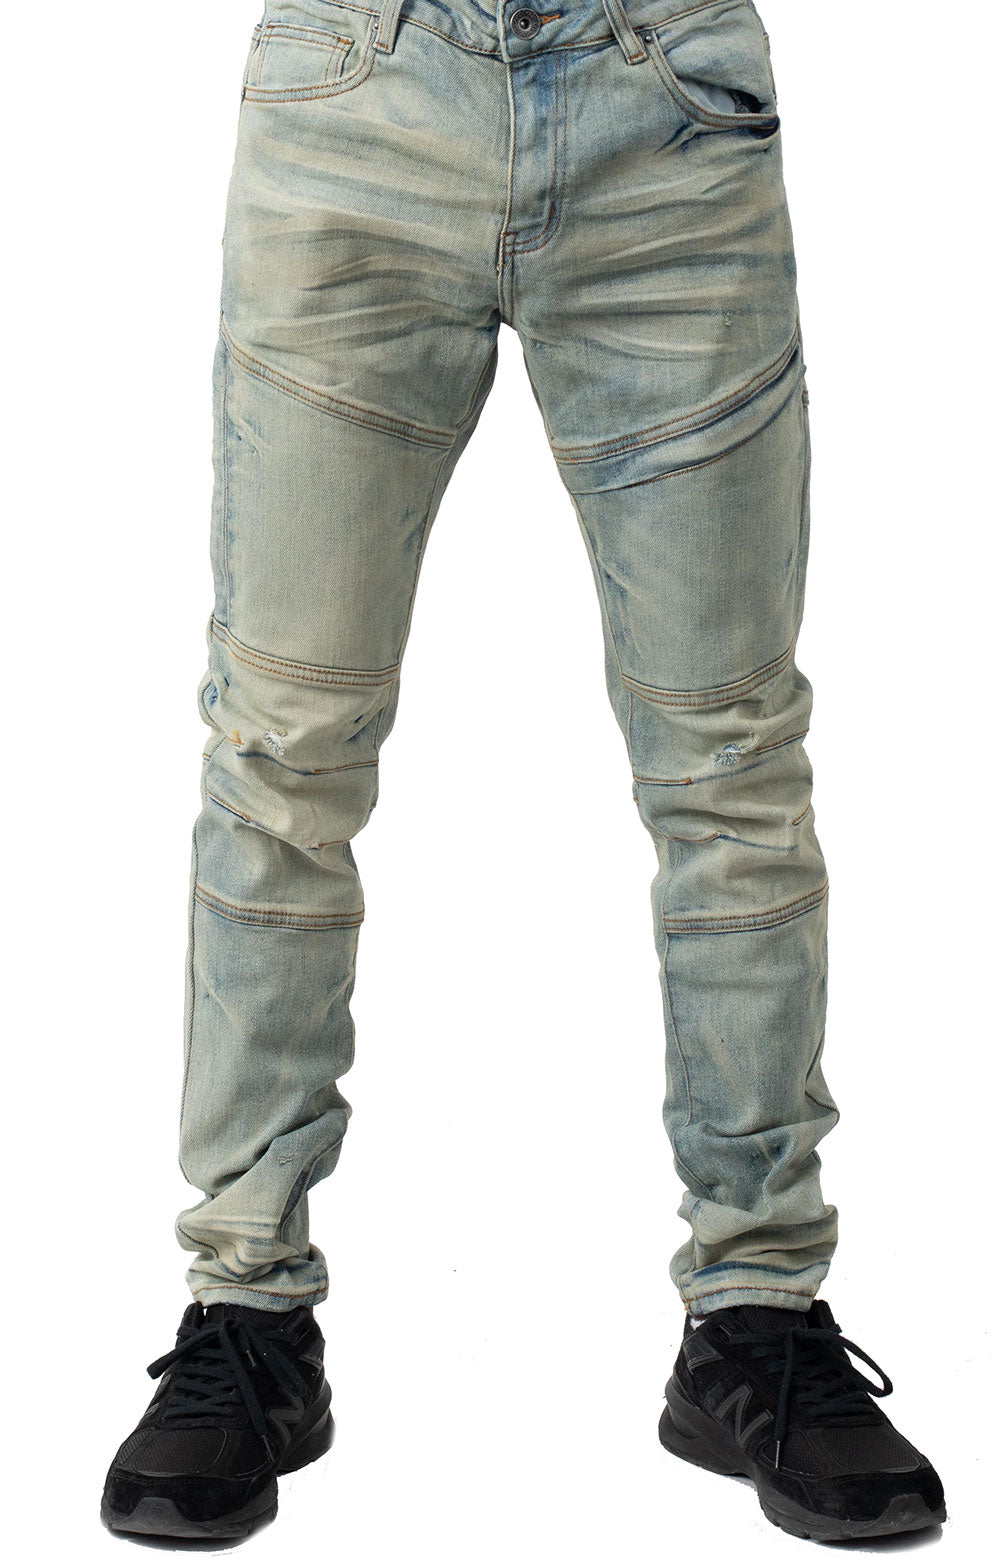 (CRYSPSP121-111) Kurt Denim Jeans - Venice Blue Green